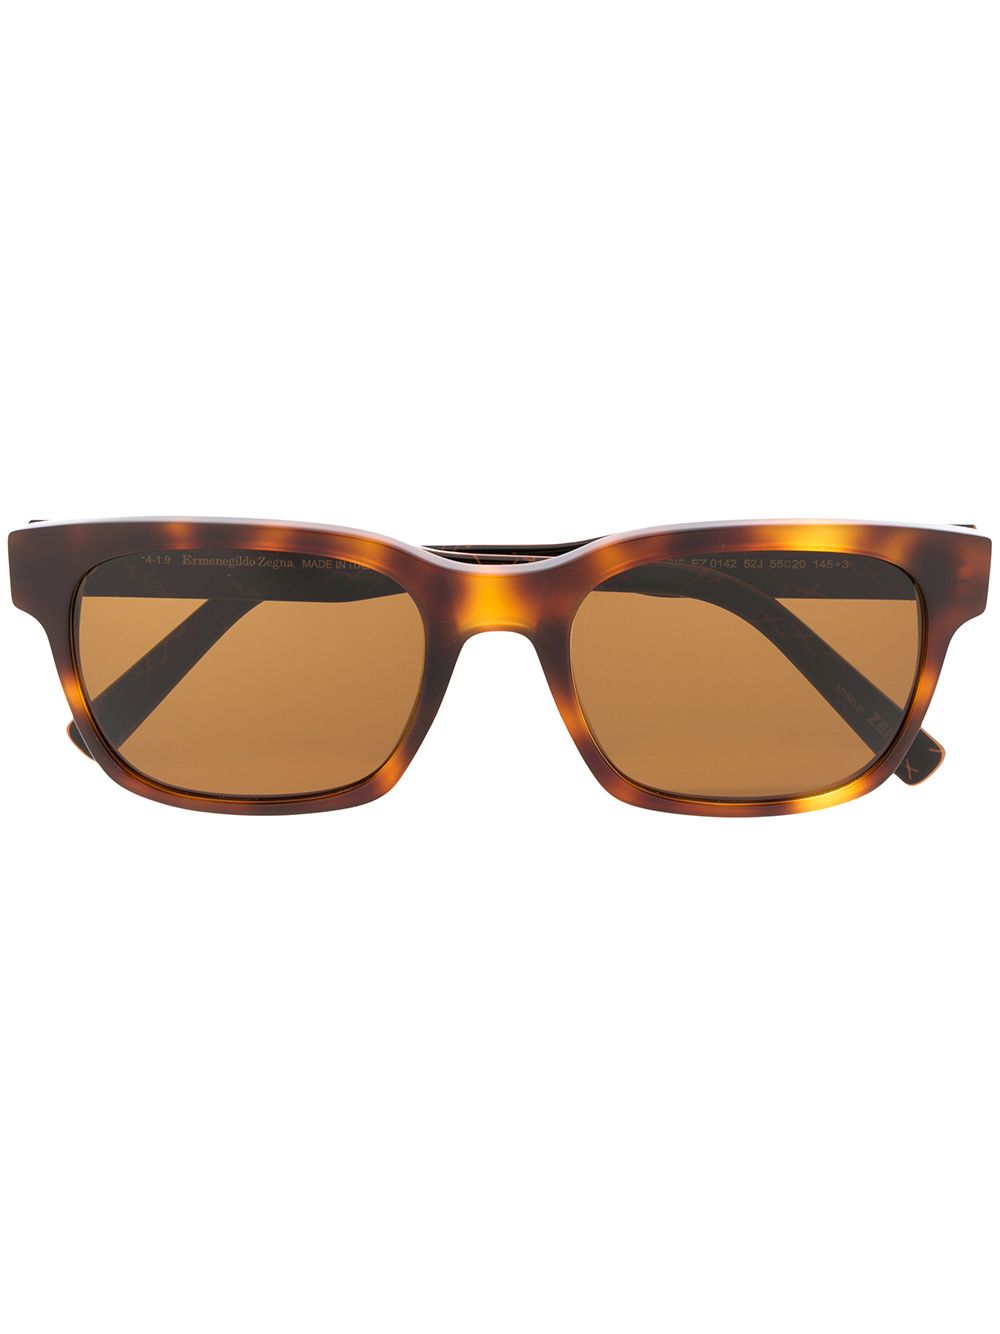 Ermenegildo Zegna солнцезащитные очки черепаховой расцветки от Ermenegildo Zegna